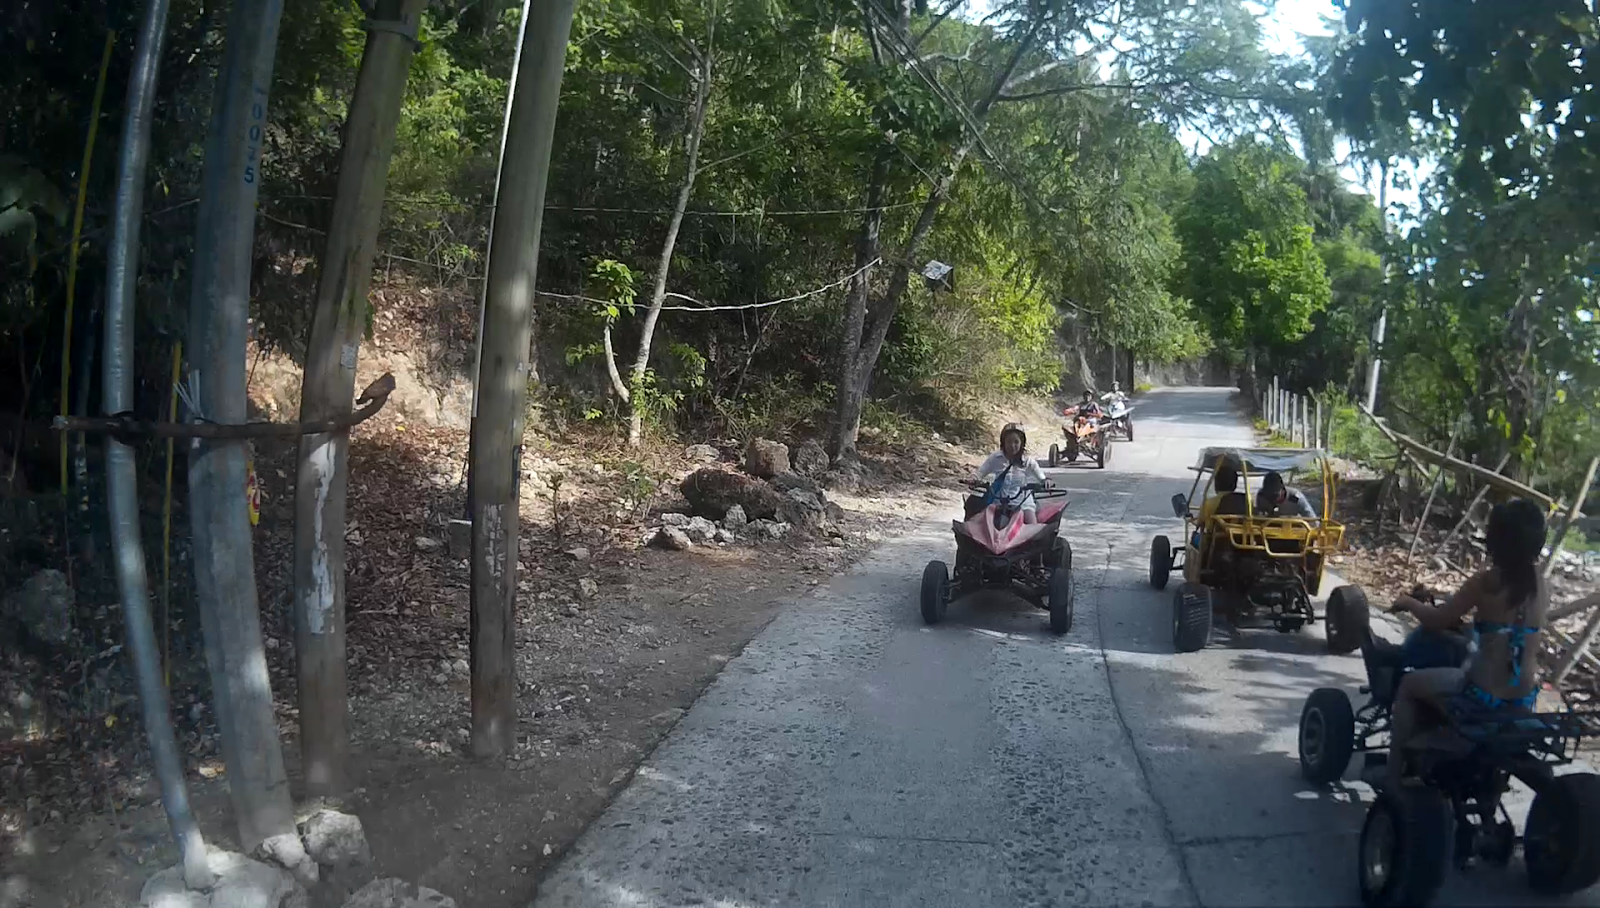 ATV ride in the streets of Boracay